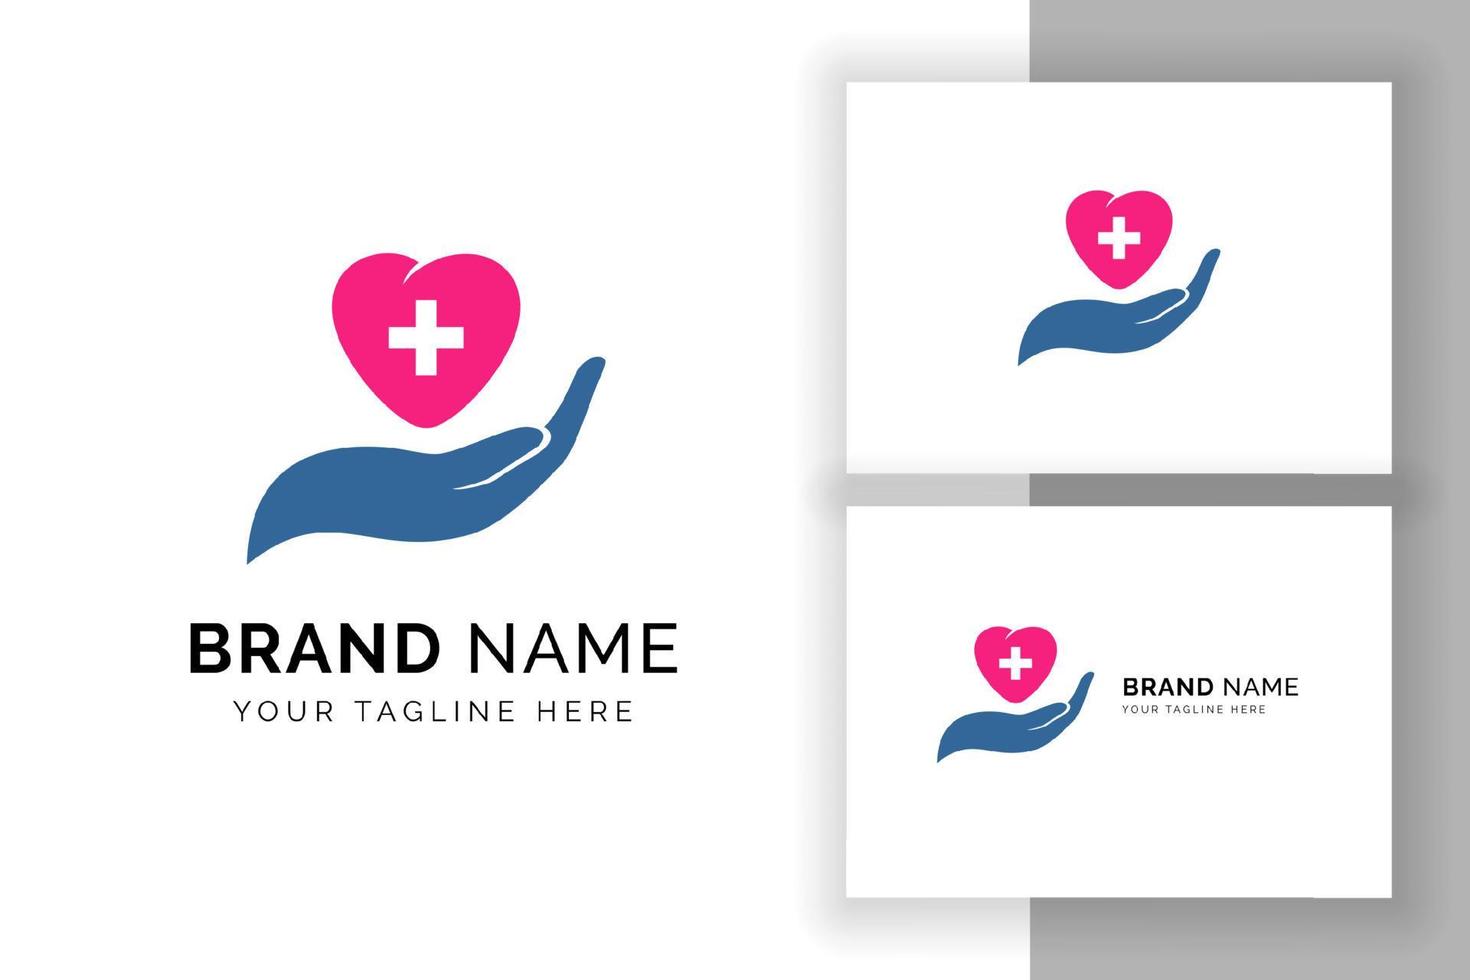 heart care logo design template vector icon illustration